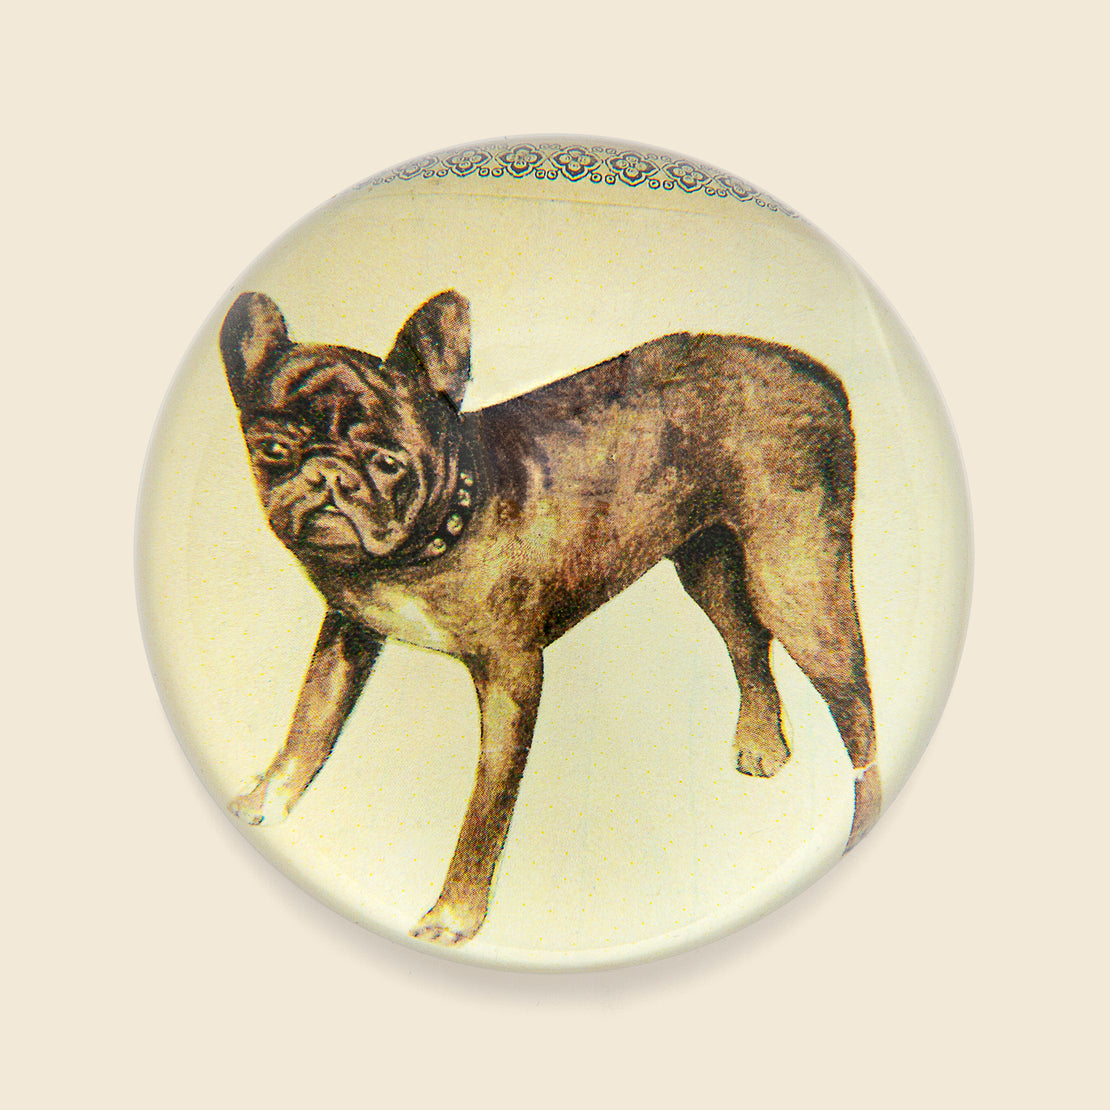 John Derian Dome Paperweight - French Bulldog